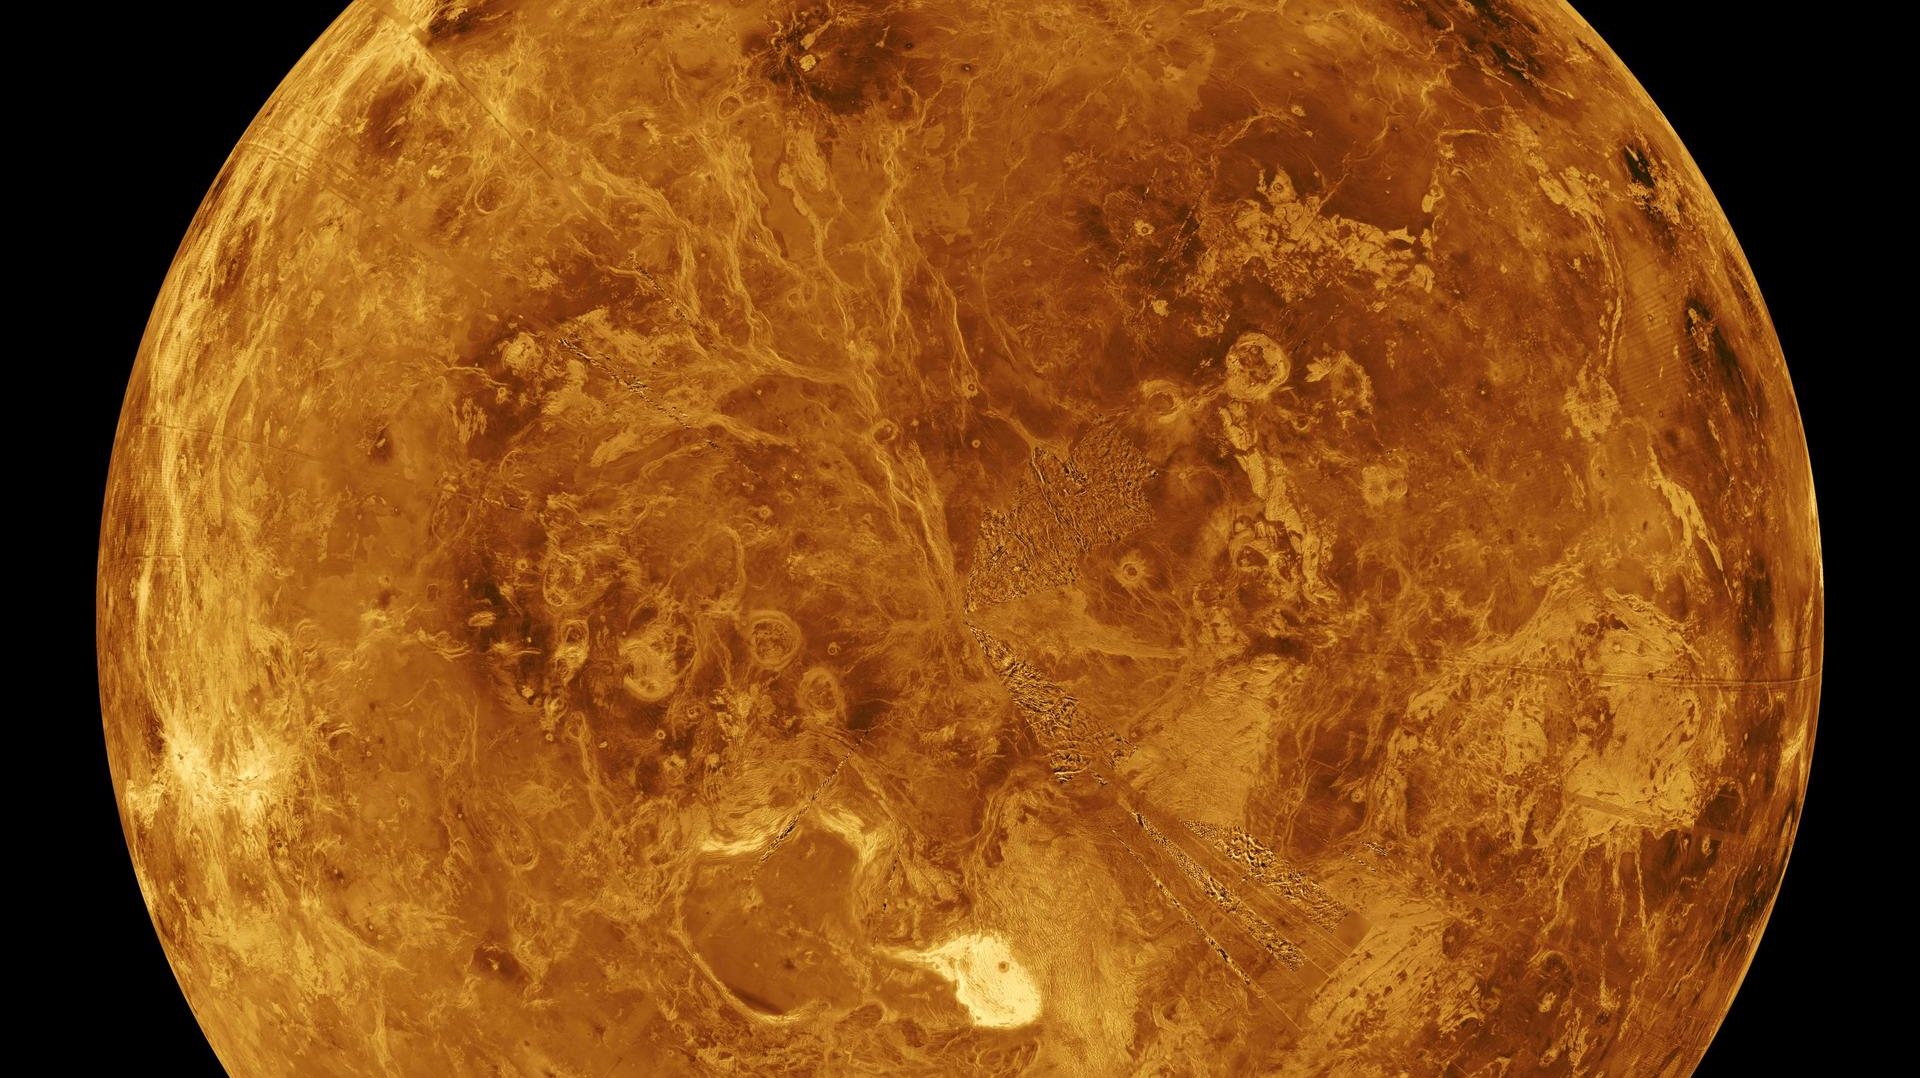 Venus – Computer Simulated Global View of the Northern Hemisphere The northern hemisphere is displayed in this global view of the surface of Venus as seen by NASA Magellan spacecraft.